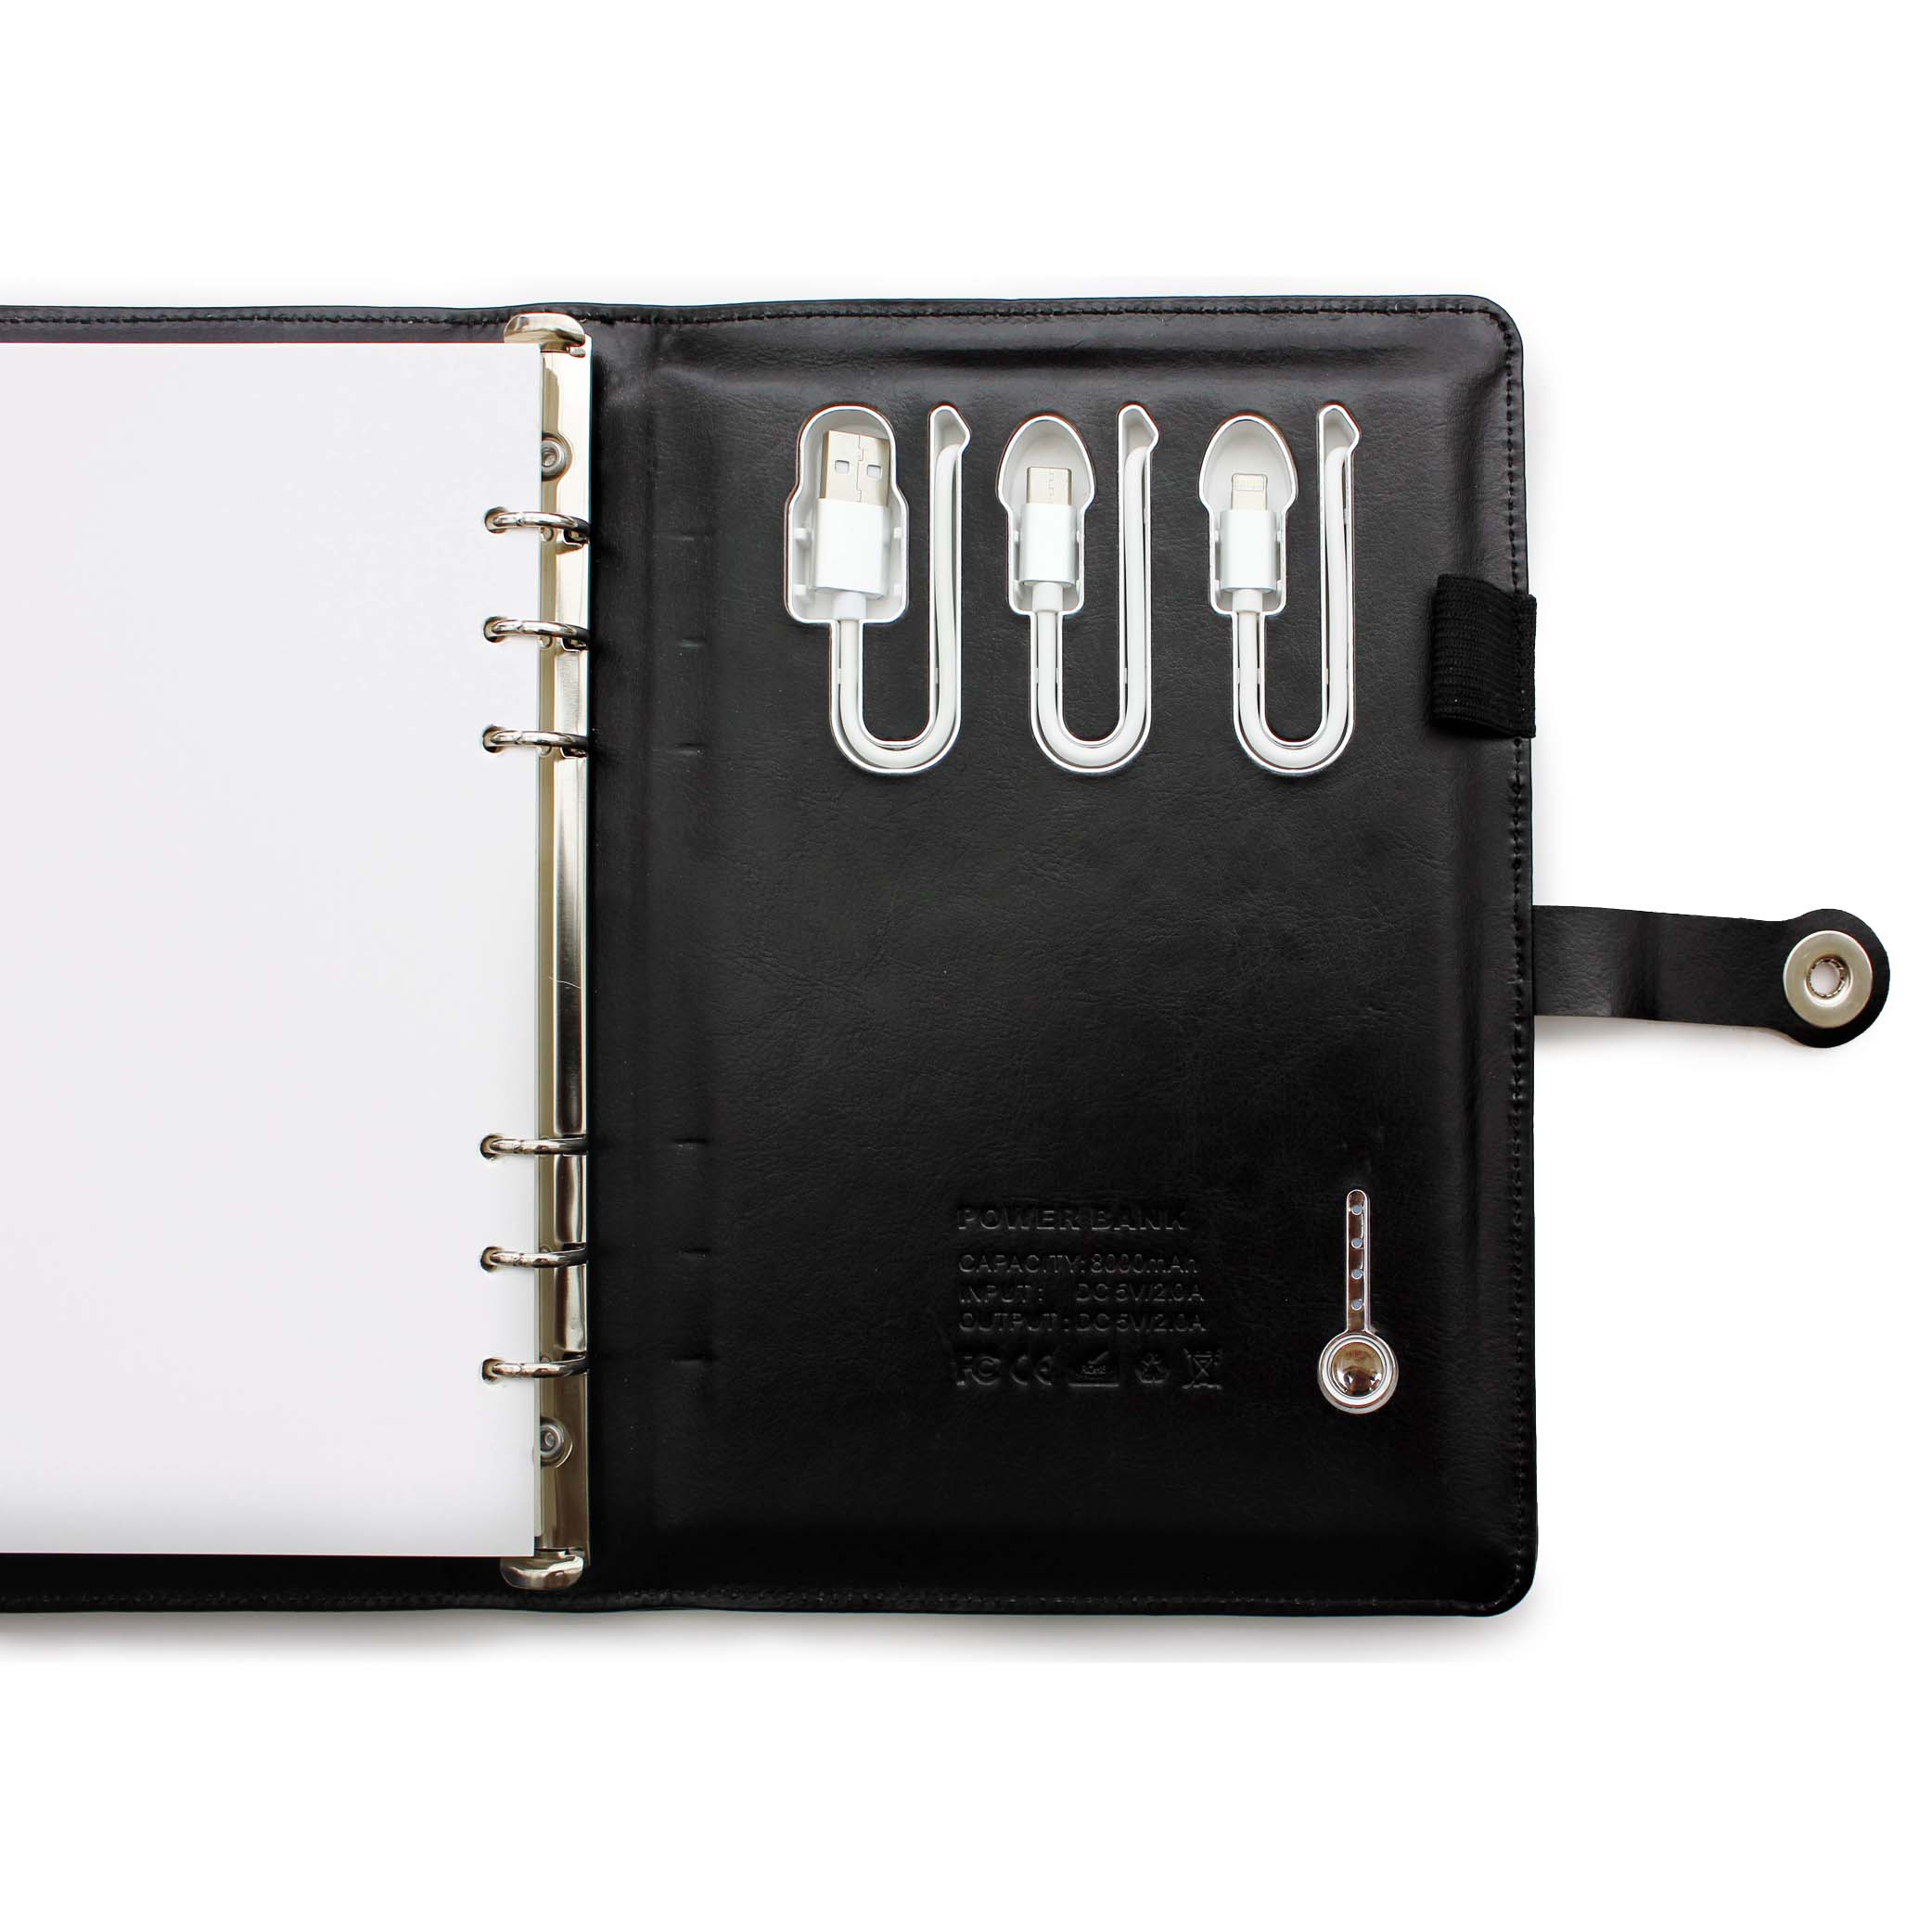 Video Screen Notebook w/ Power Bank & USB Flash Drive